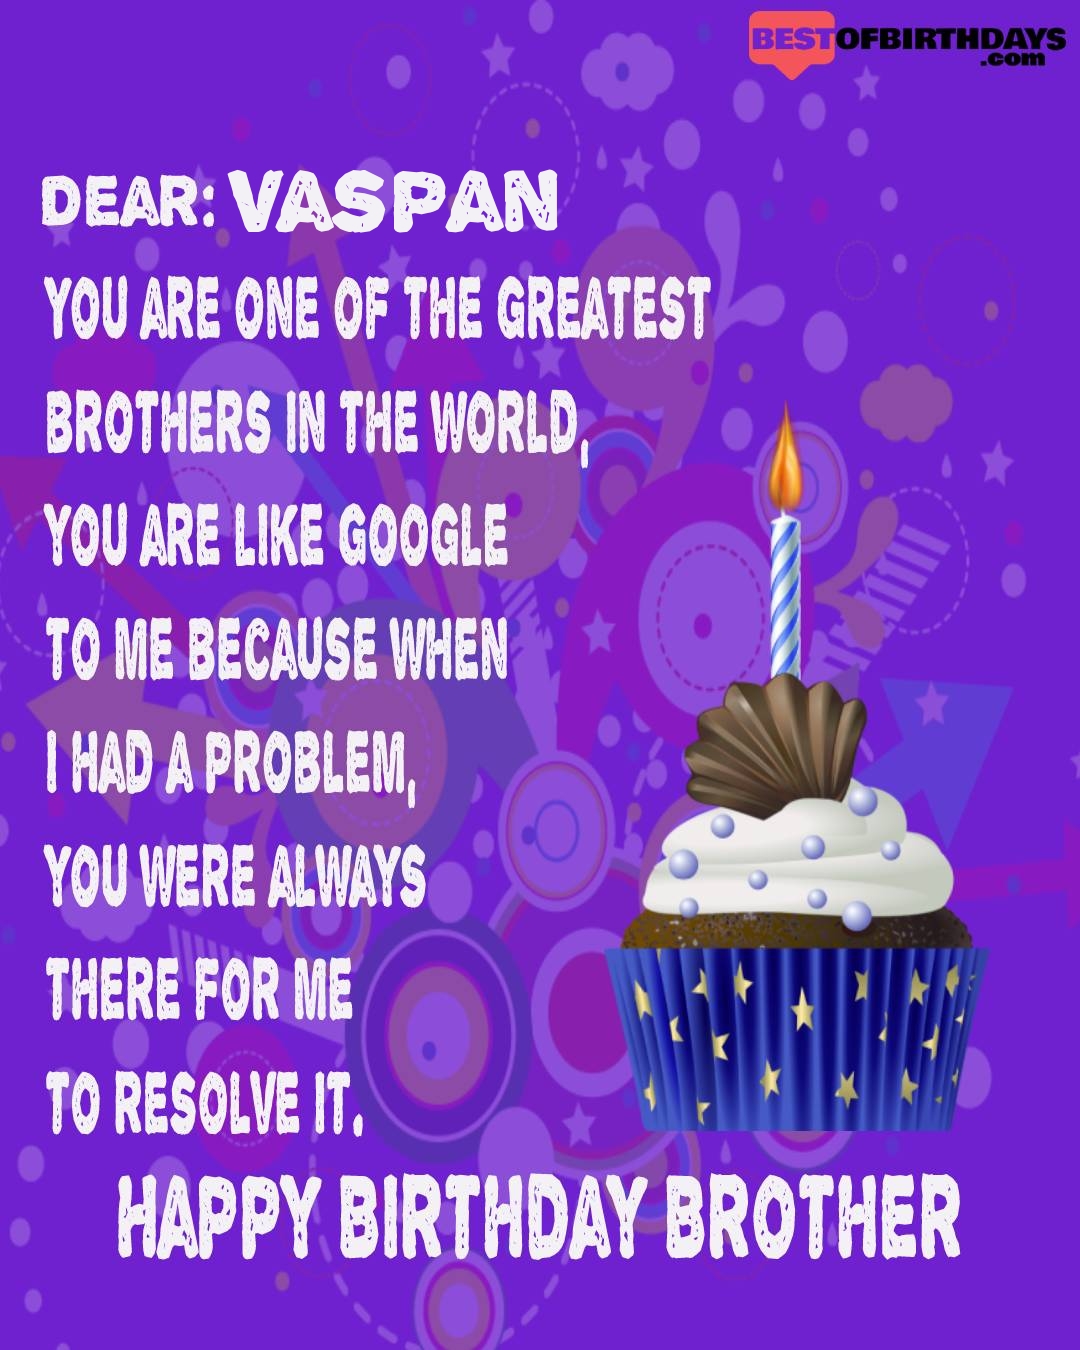 Happy birthday vaspan bhai brother bro